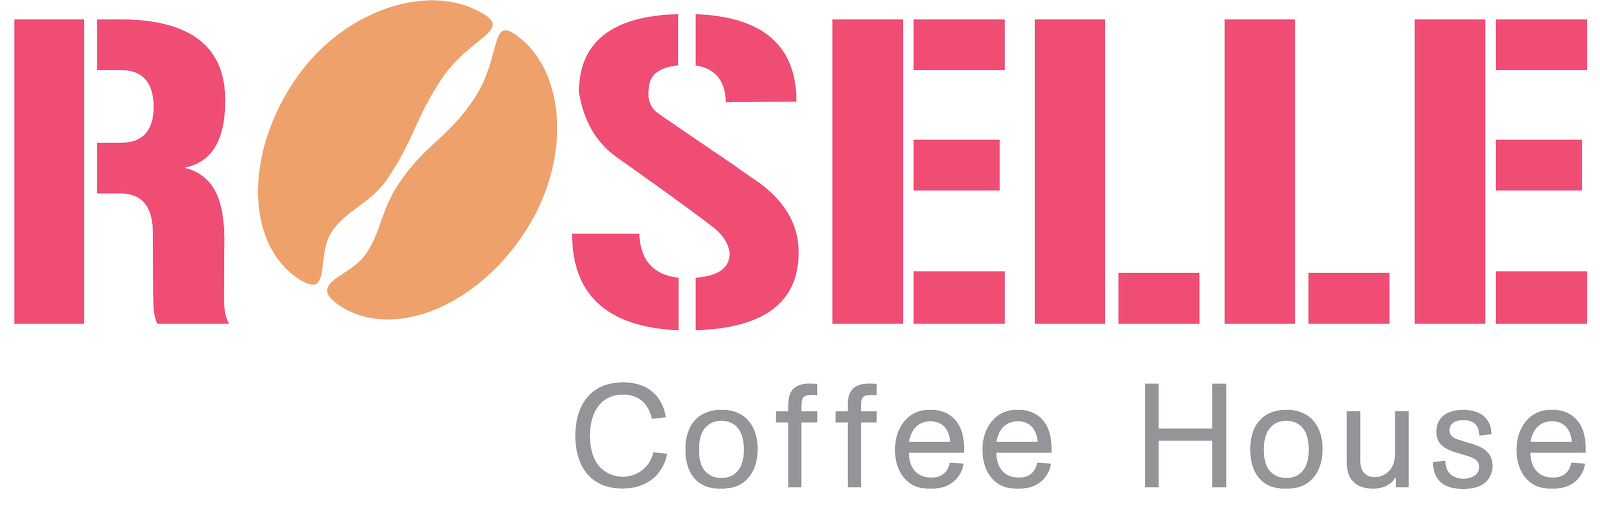 Roselle Coffee House Logo - Lexis Hibiscus